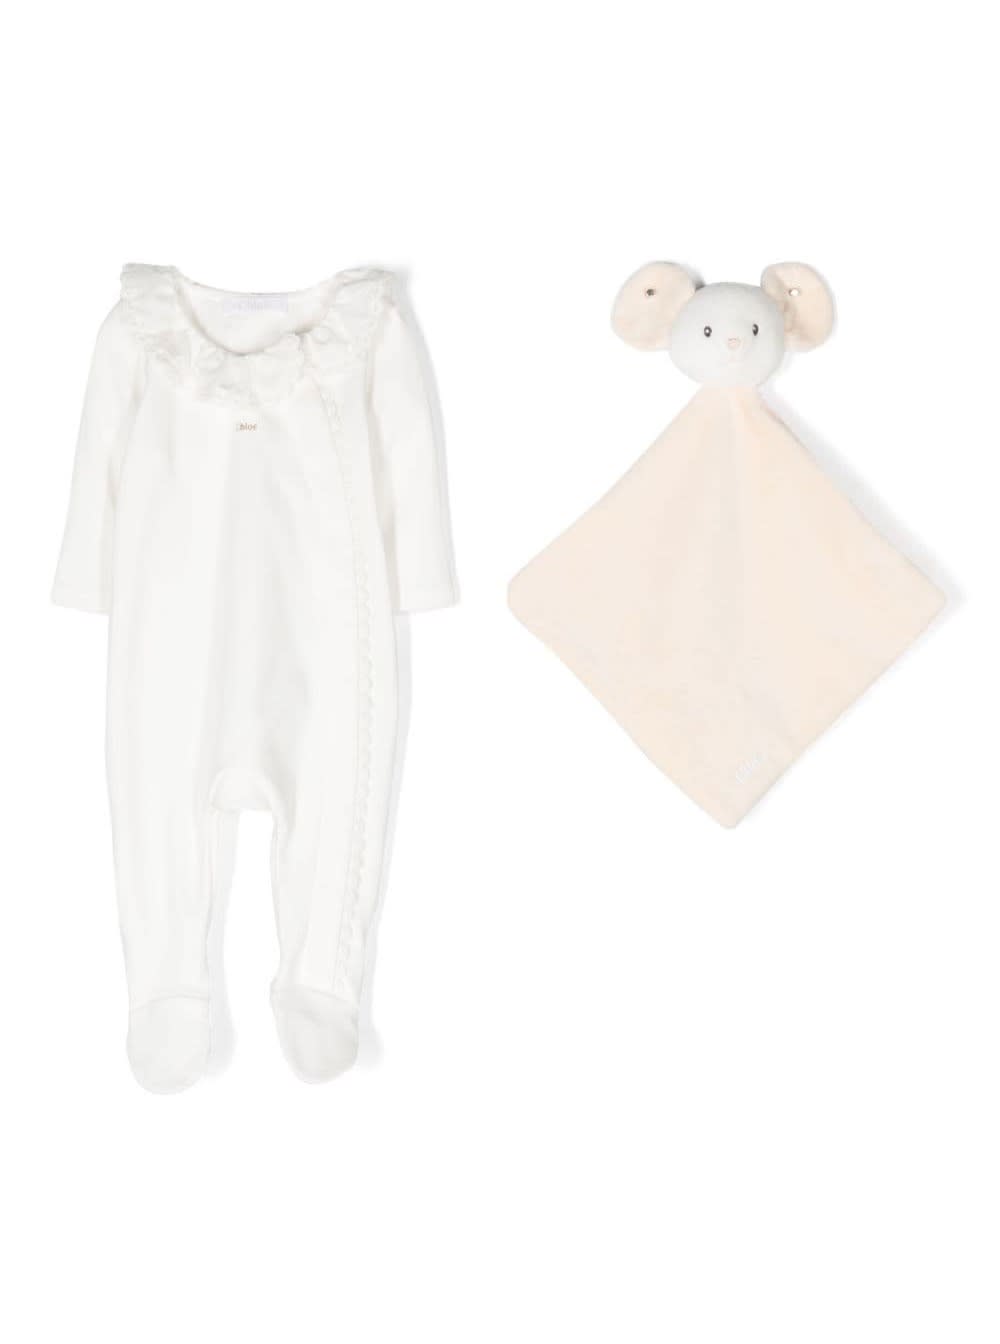 Chloé Babies' Kit In White